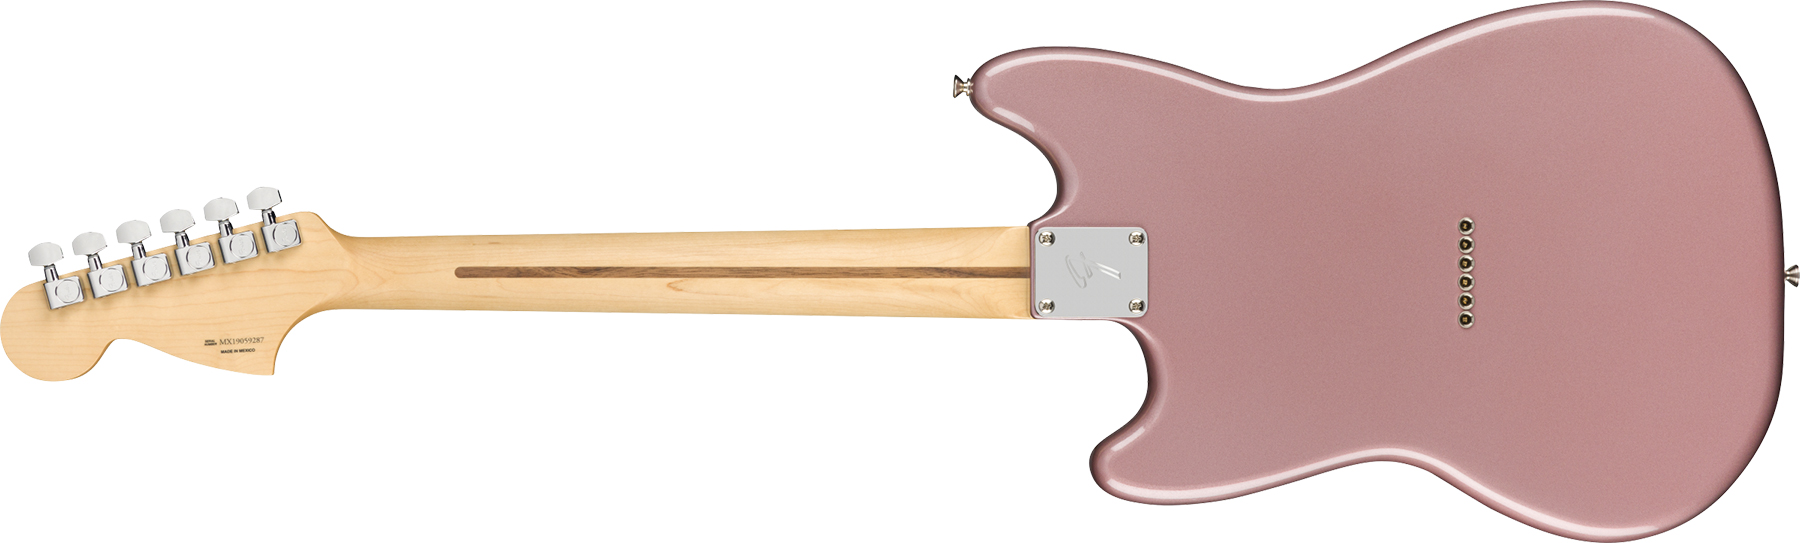 Fender Mustang Player 90 Mex Ht 2p90 Pf - Burgundy Mist Metallic - Retro rock electric guitar - Variation 1